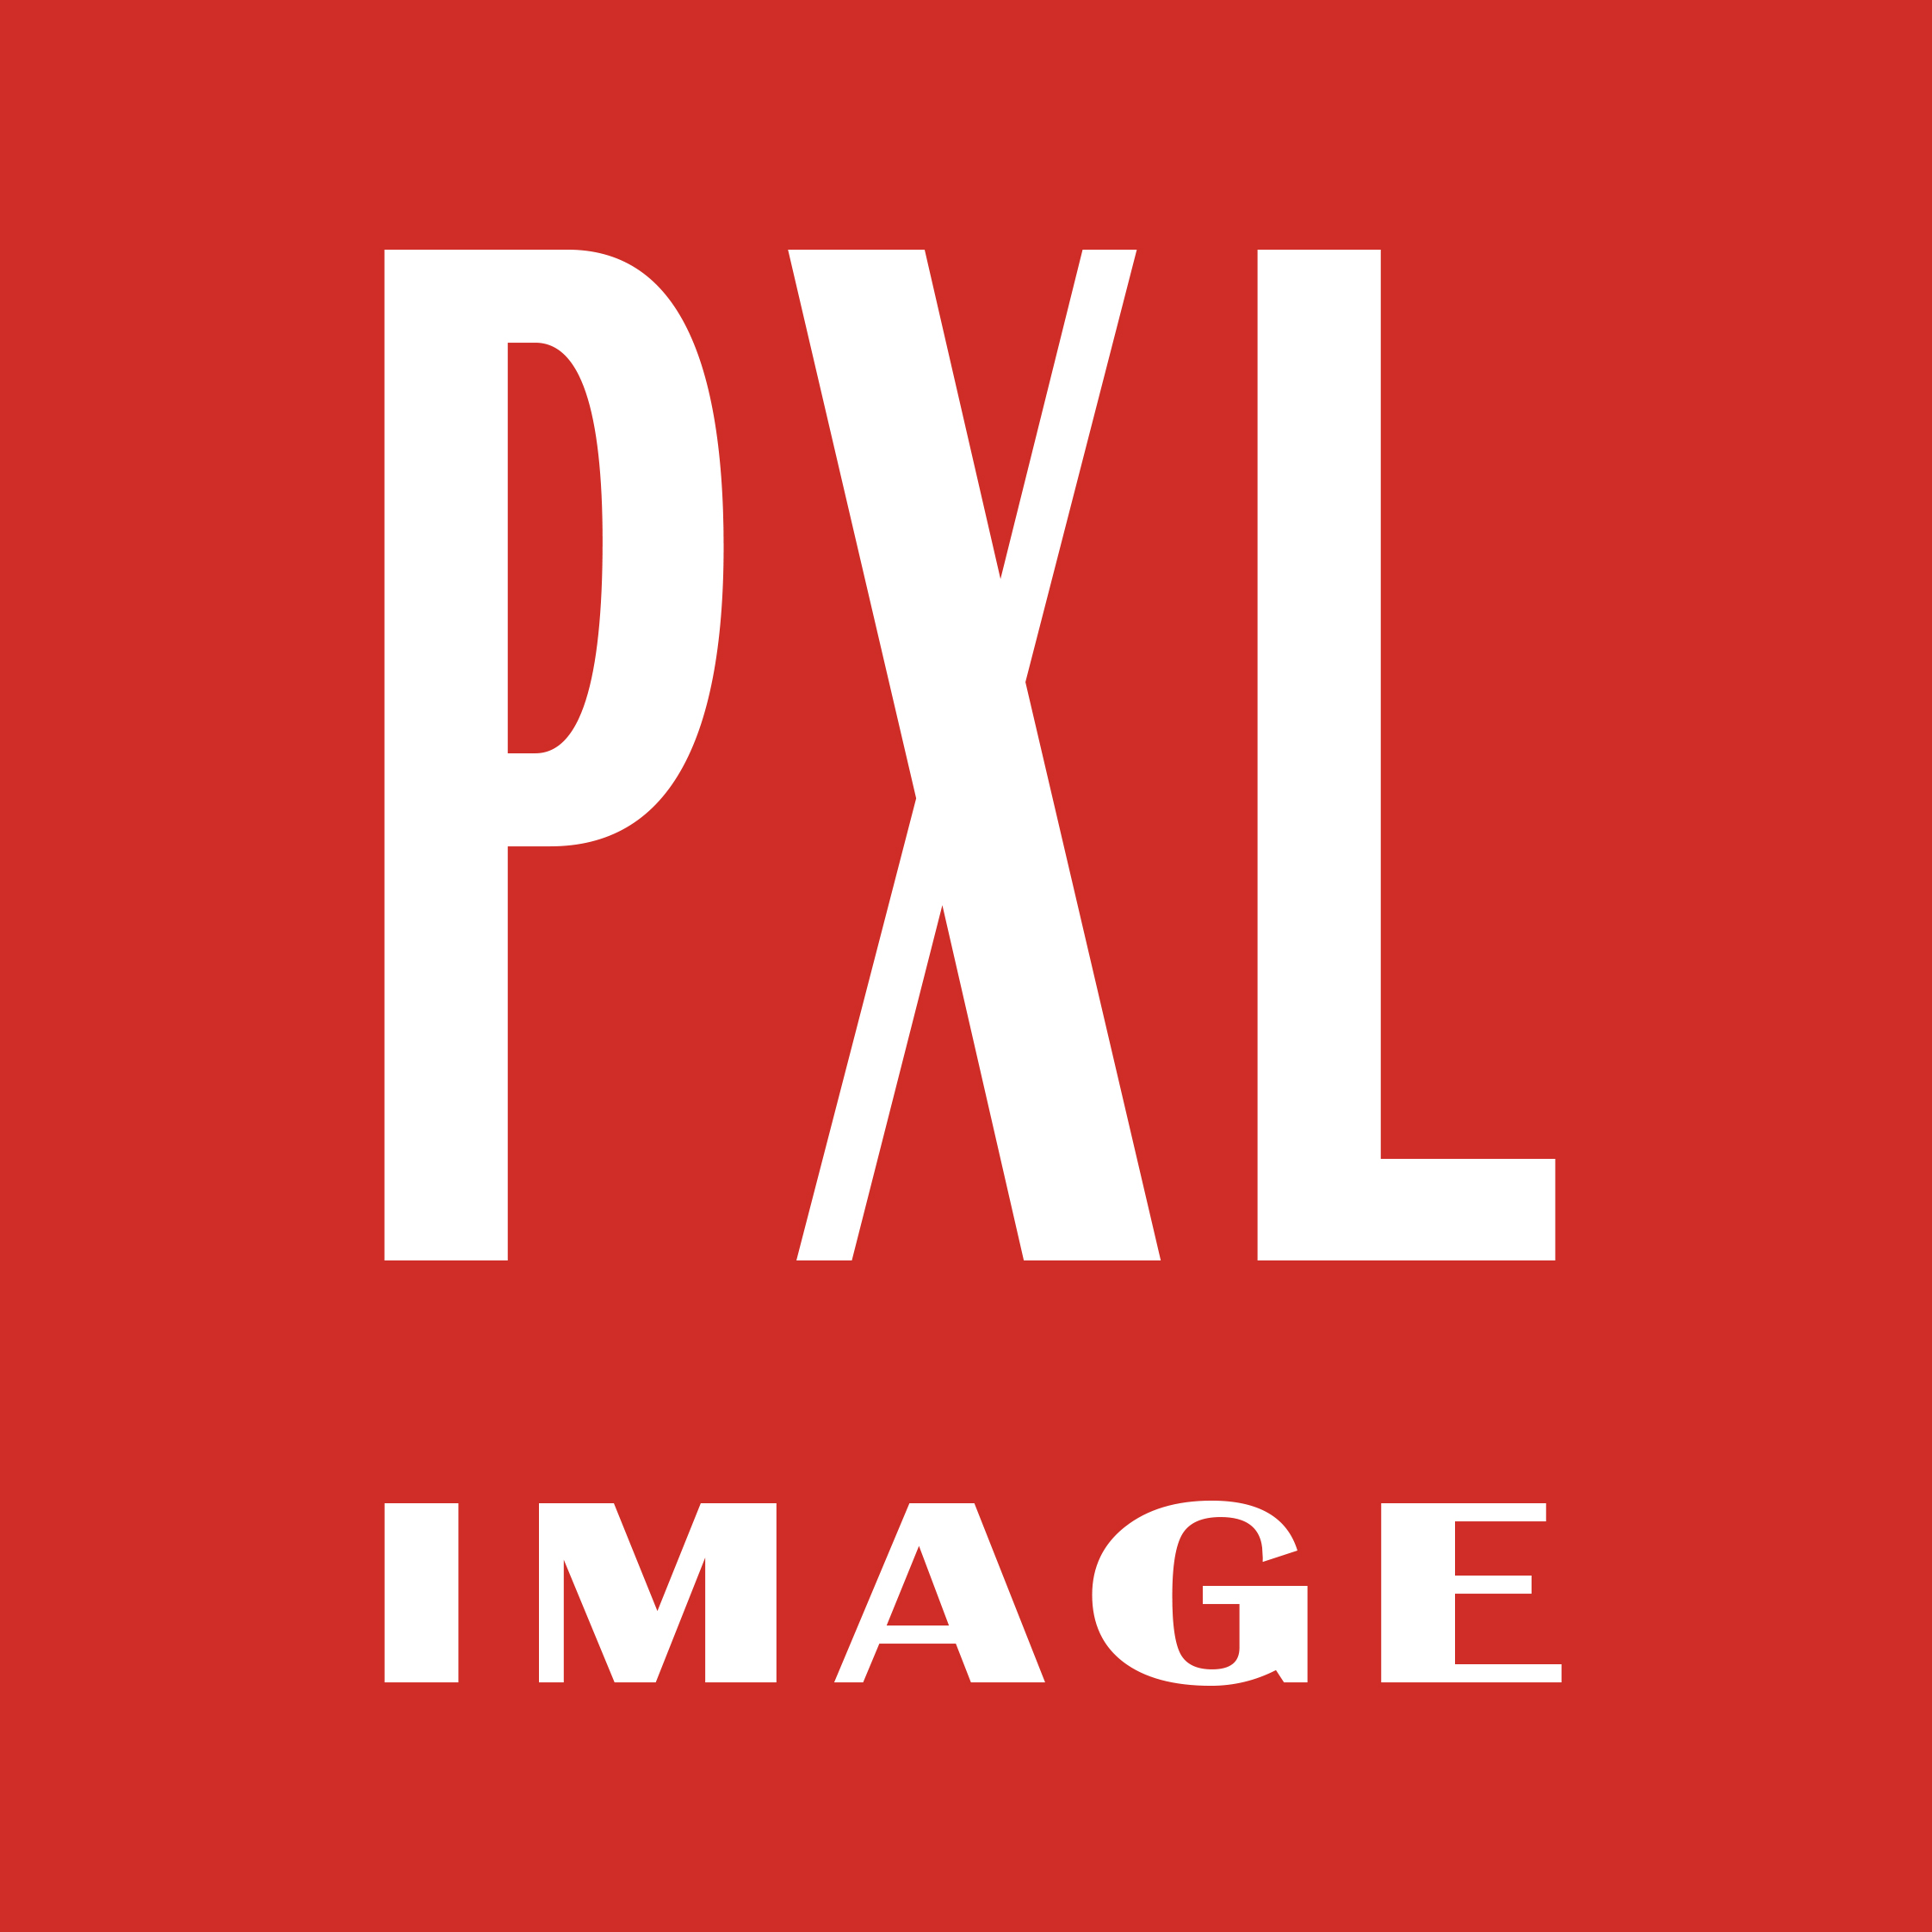 Pxl Image Formations 3d A Vendome